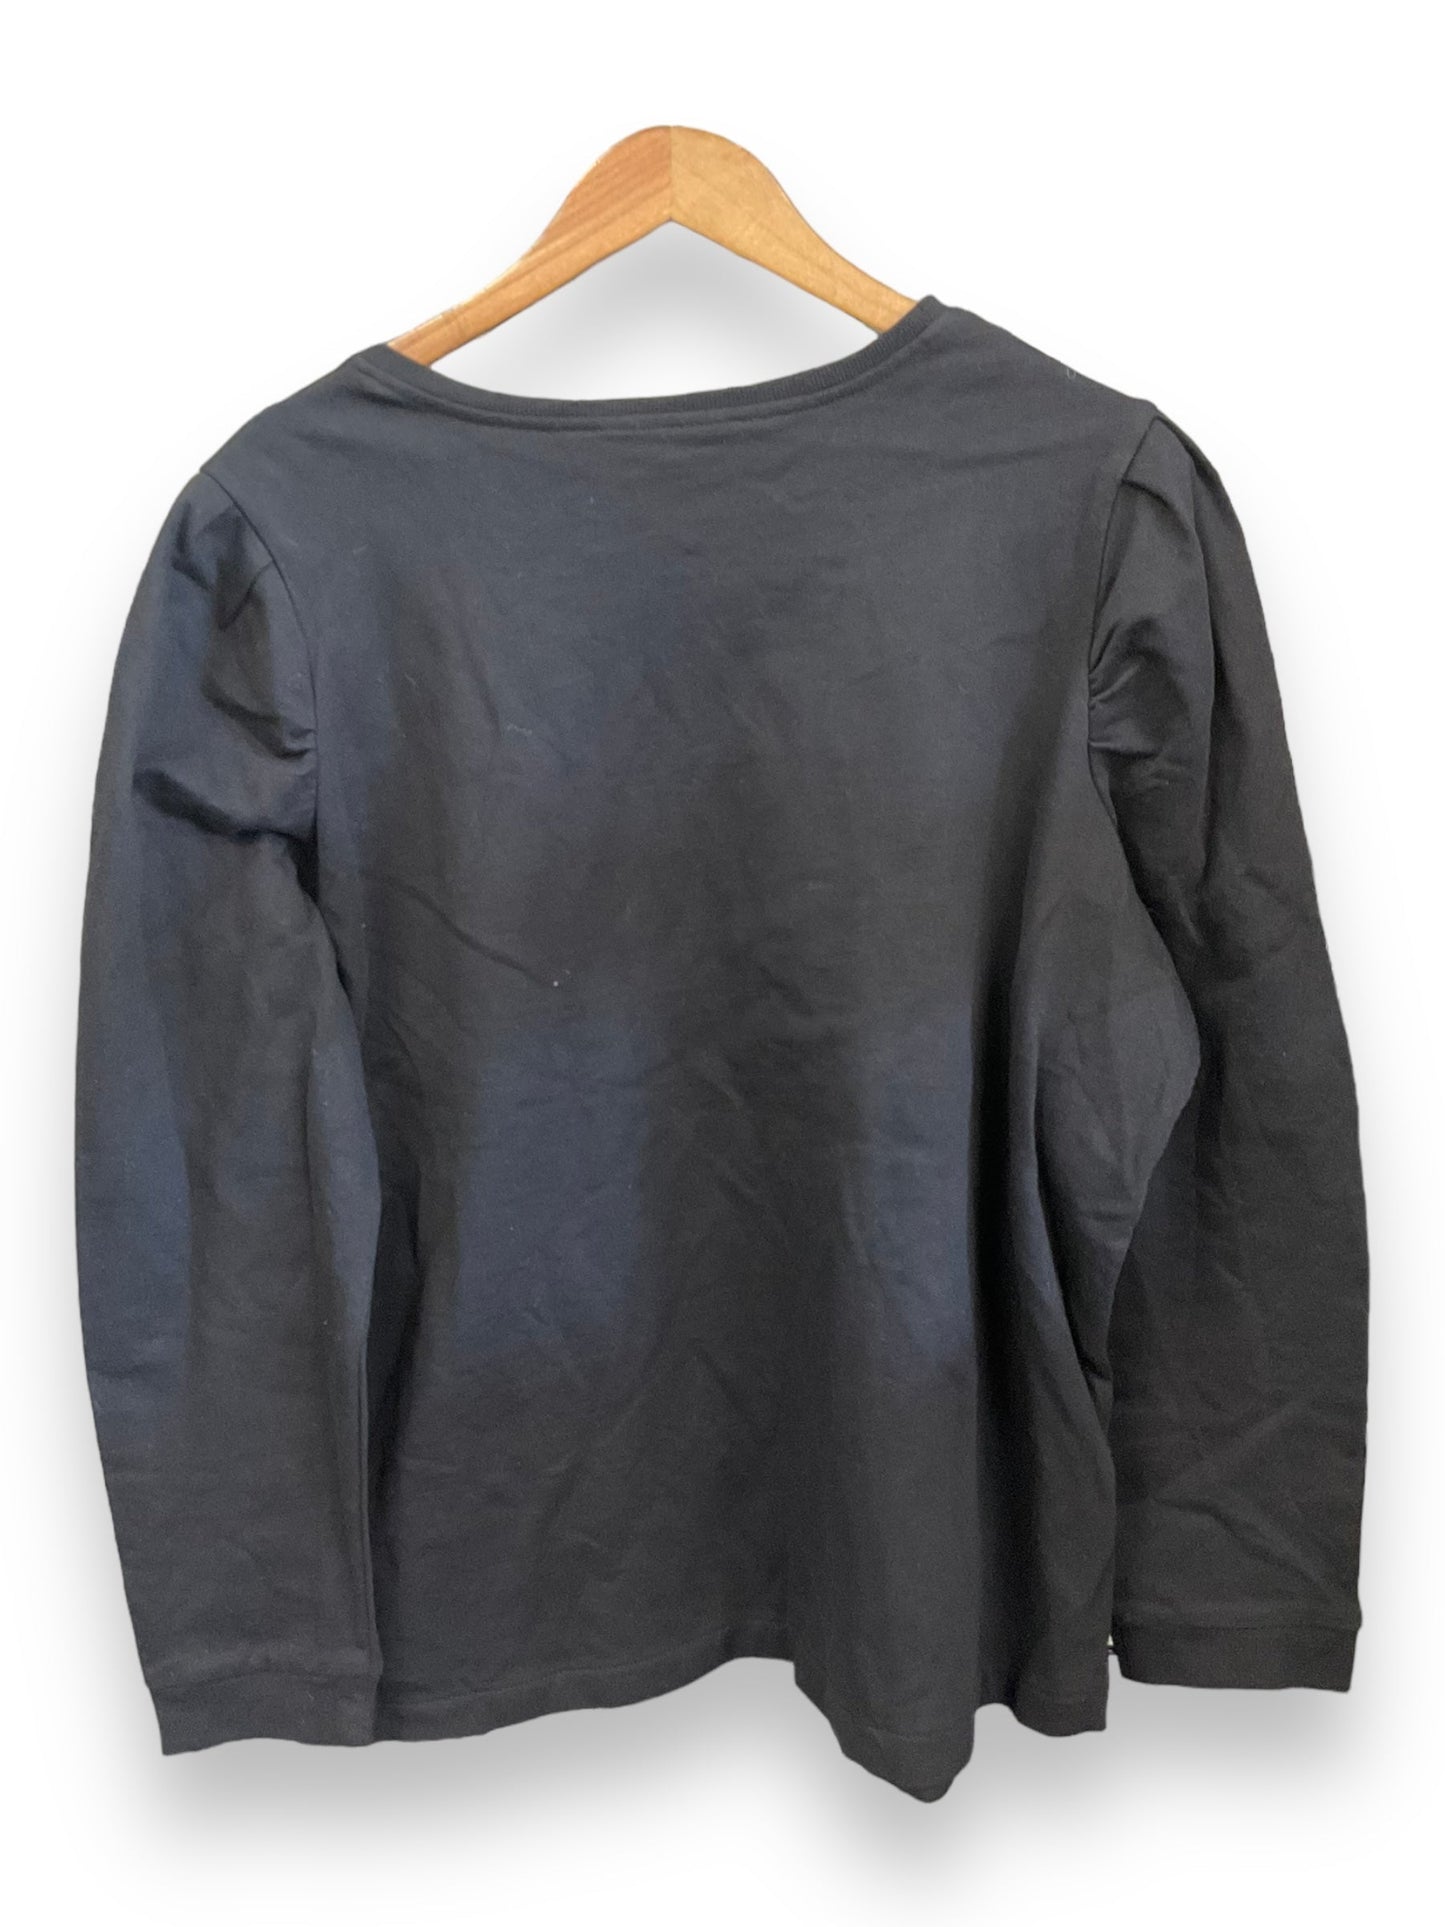 Sweatshirt Crewneck By Workshop  Size: 2x